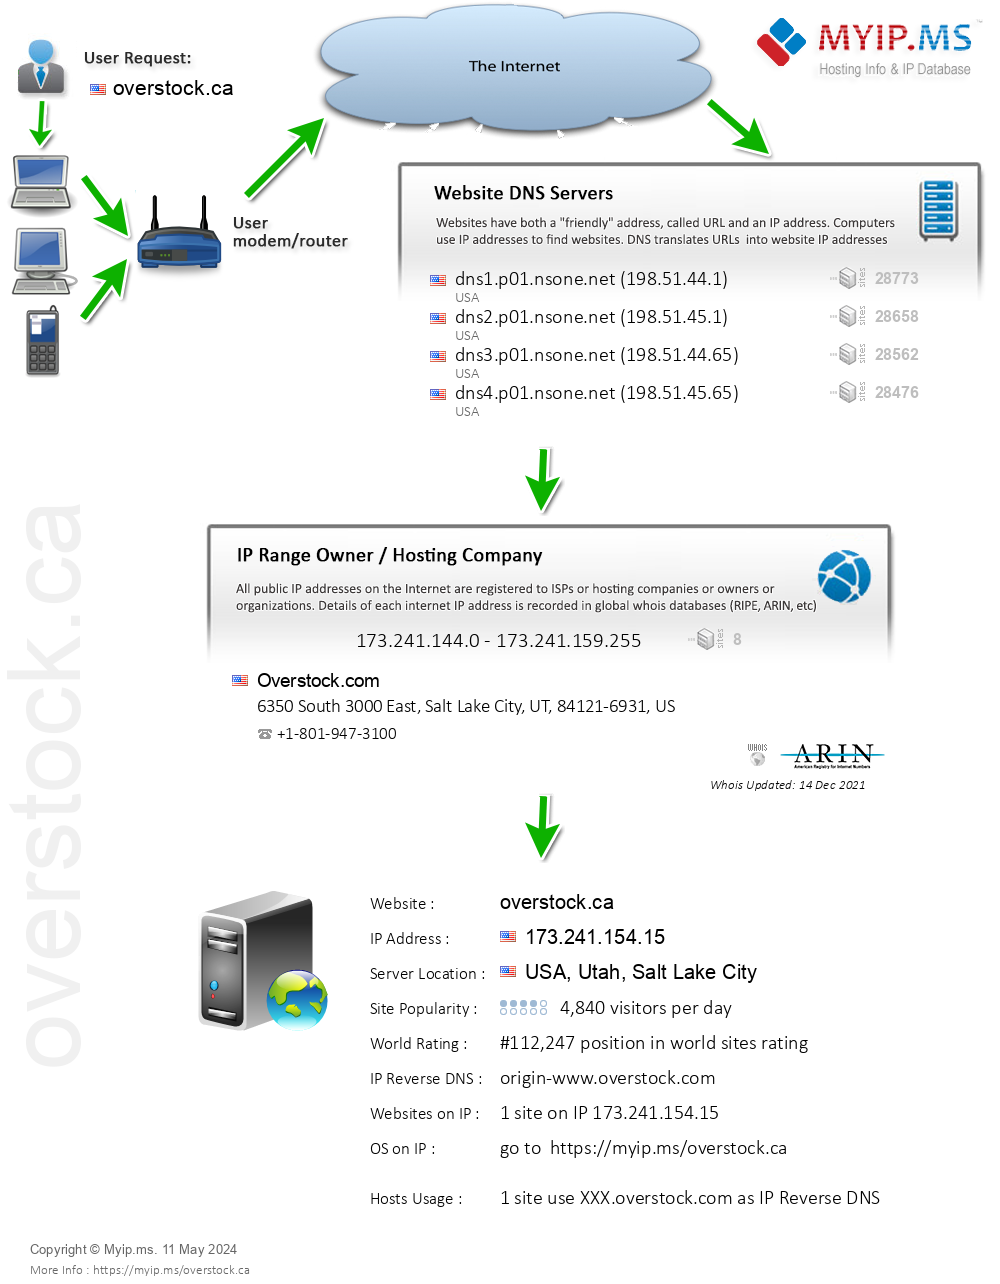 Overstock.ca - Website Hosting Visual IP Diagram